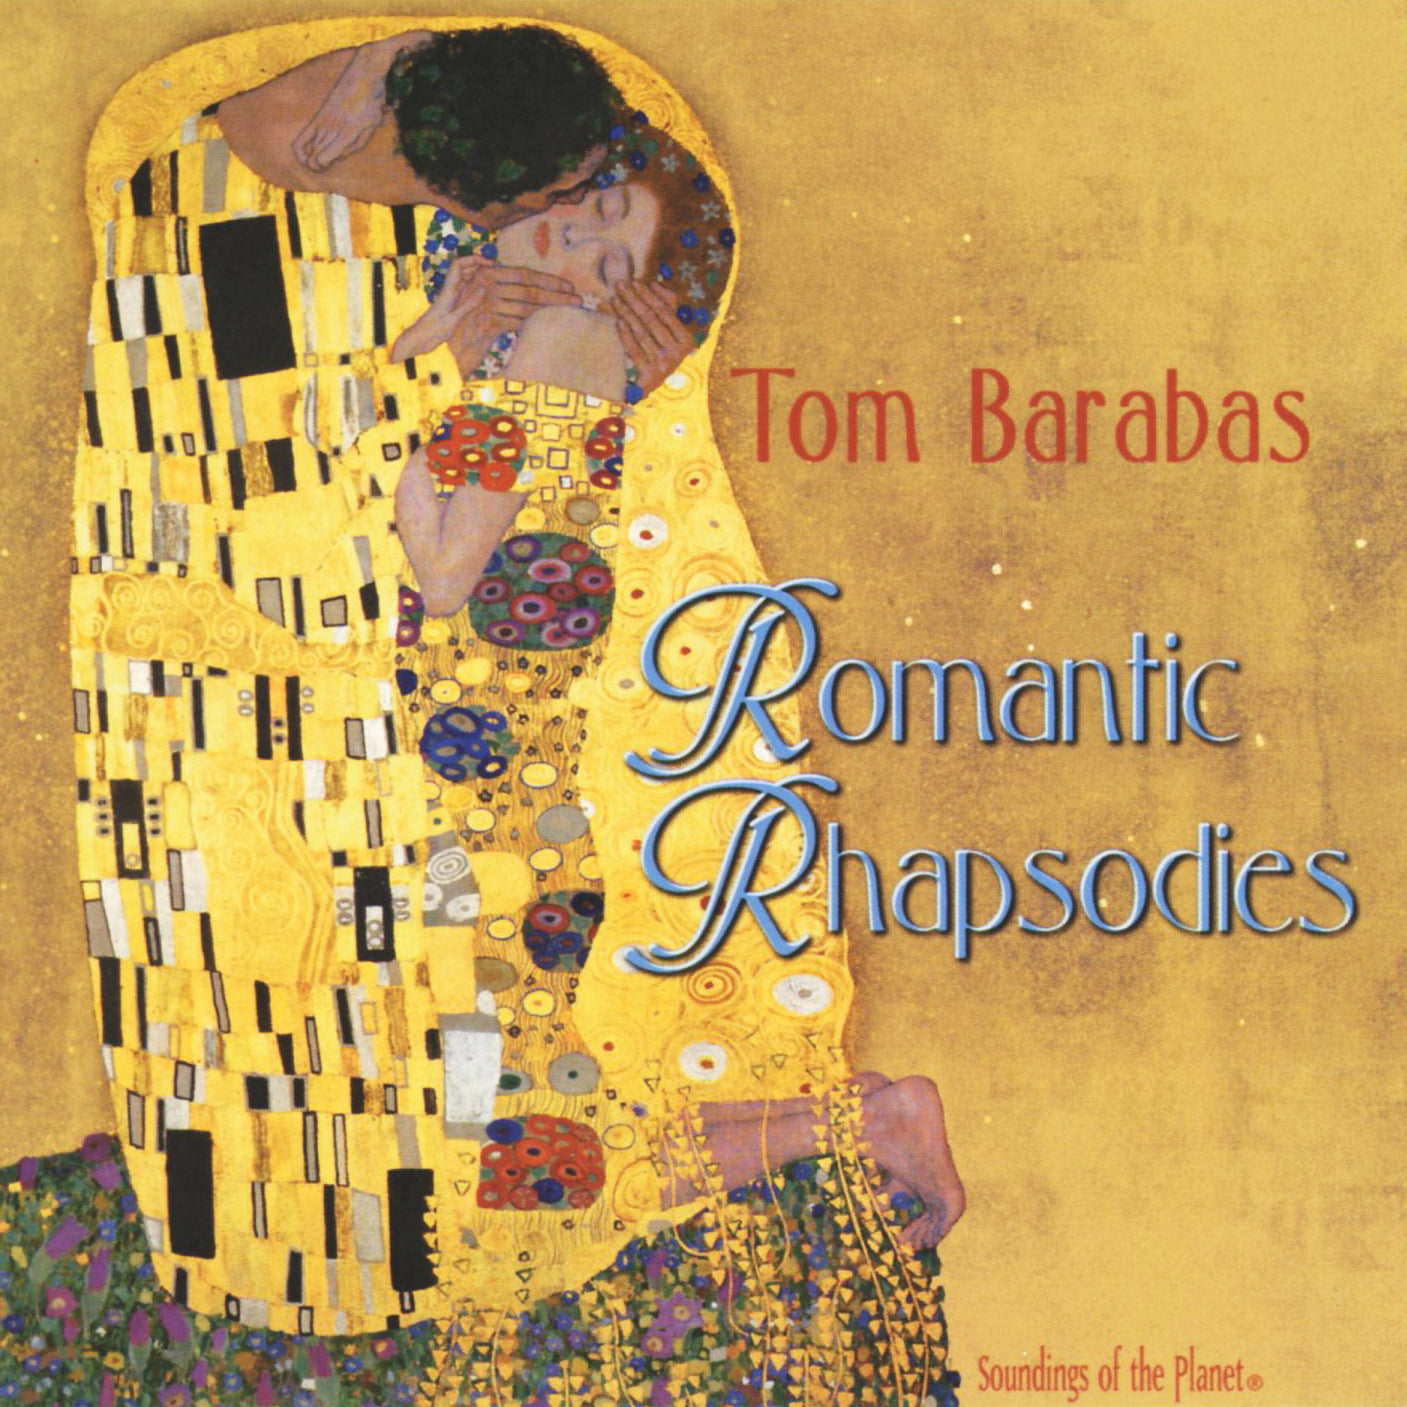 romantic rhapsodies by Tom Barabas Soundings of the Planet